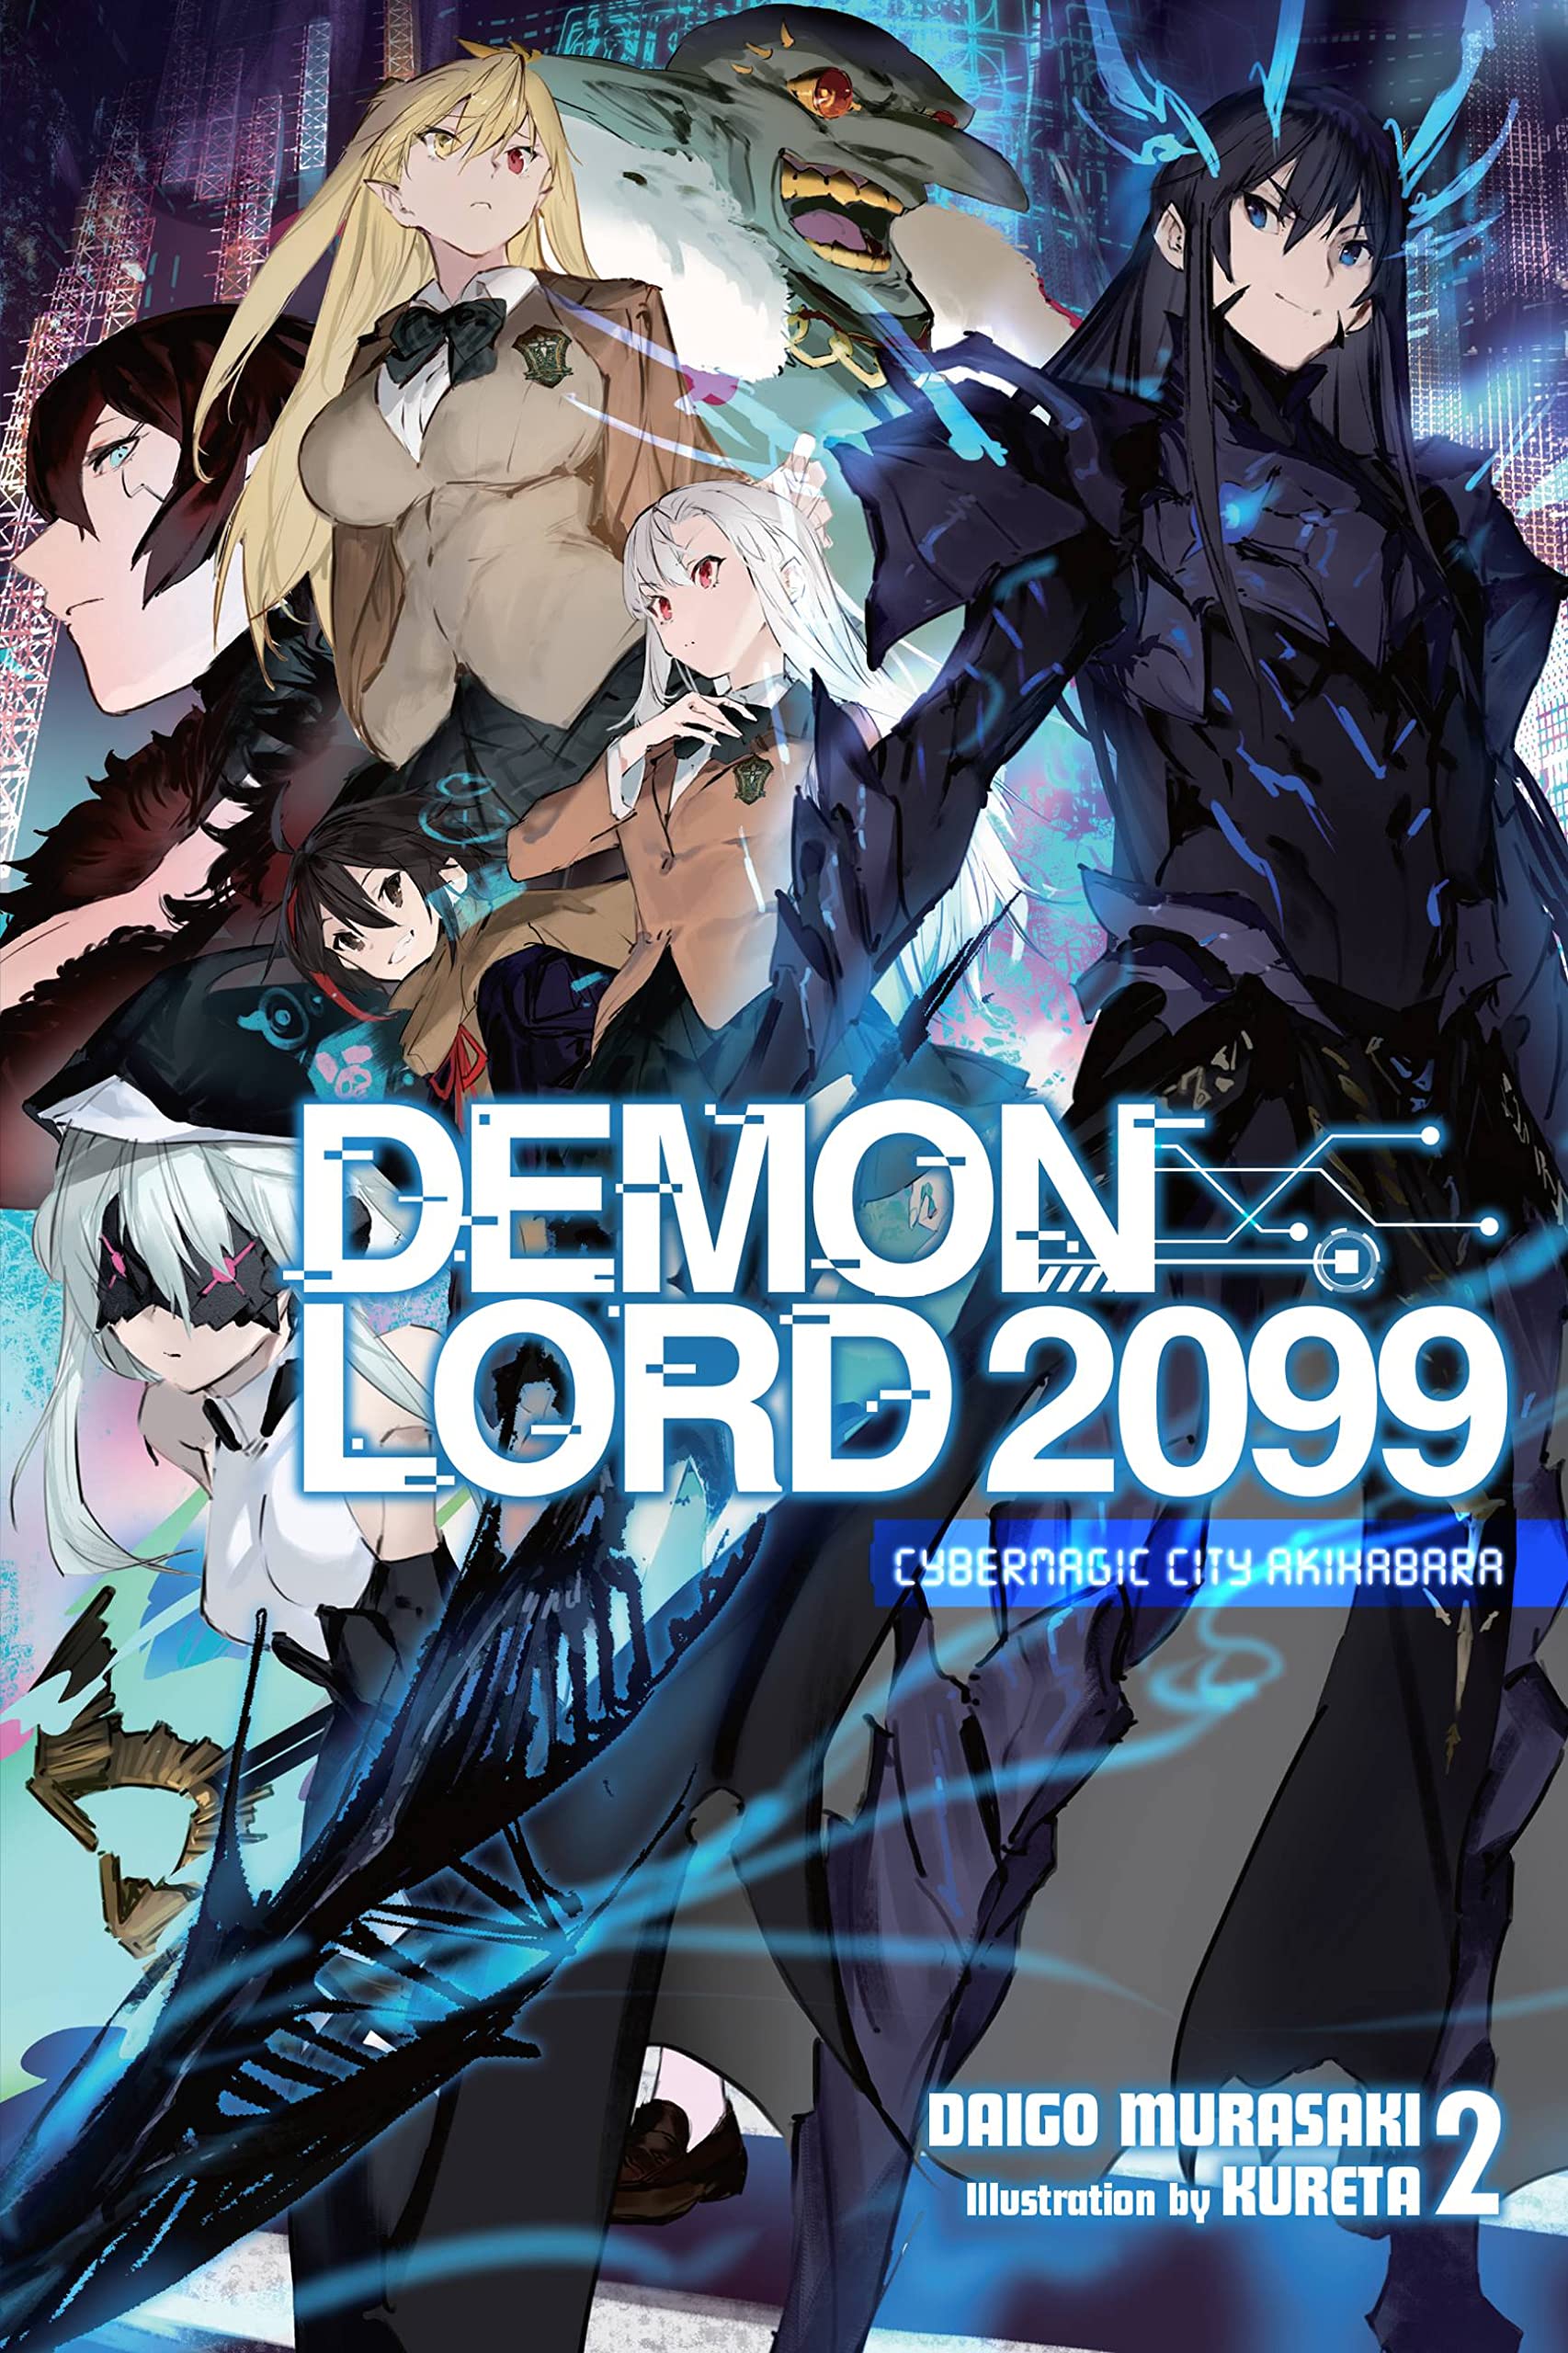 Demon Lord 2099 Volume 2  Cybermagic City Akihabara Review  Anime UK News